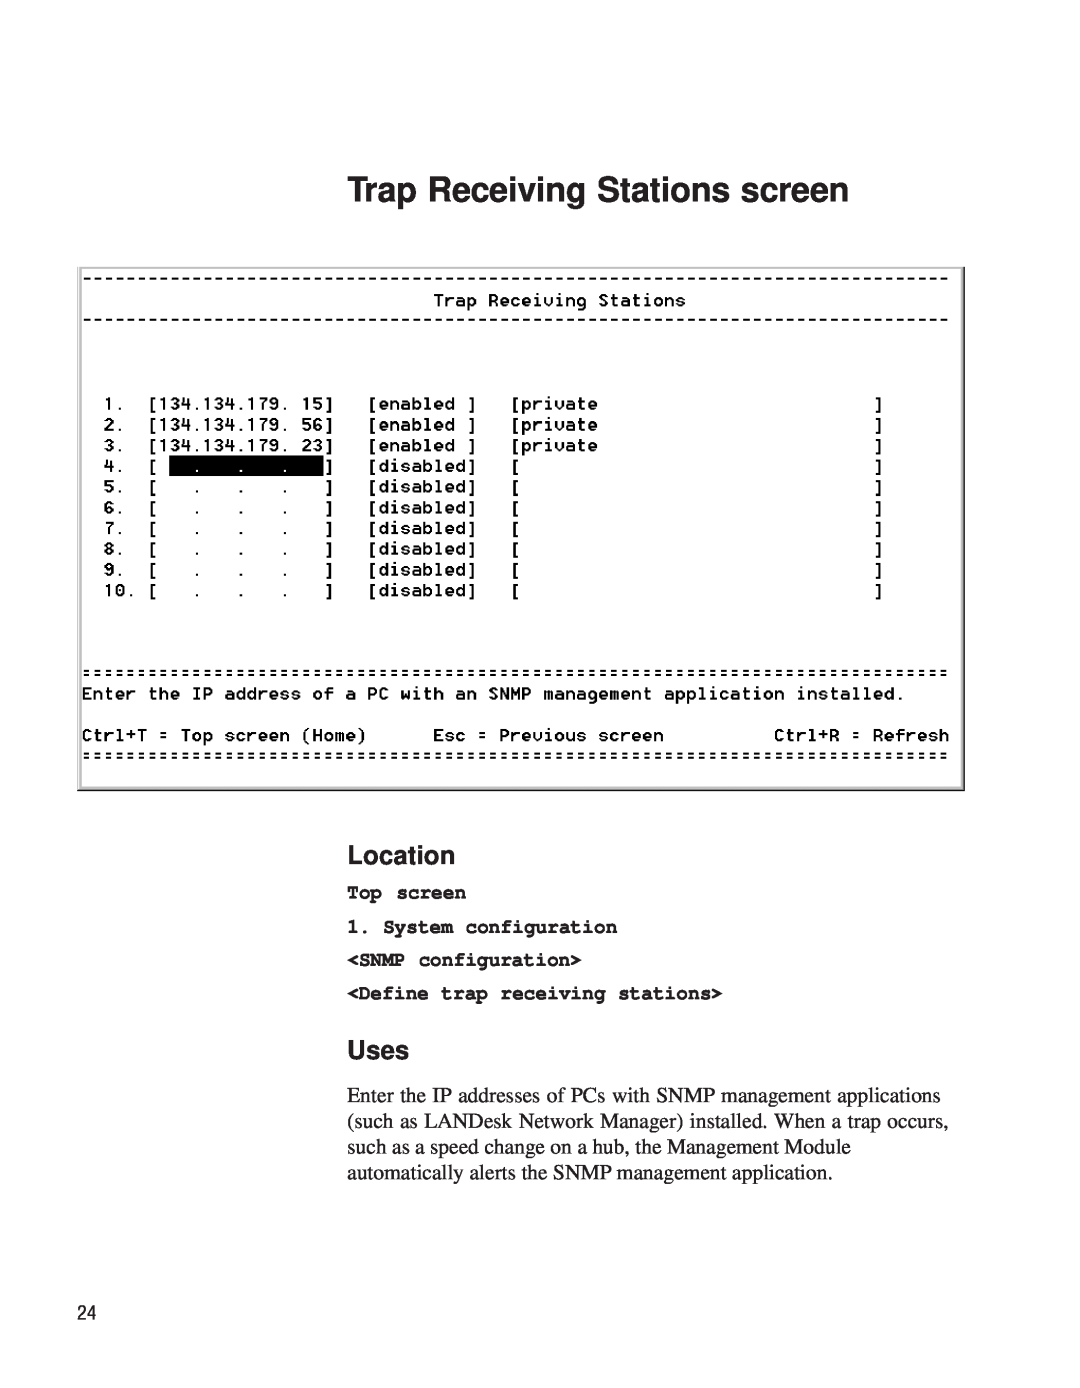 Intel EE110MM manual Trap Receiving Stations screen, <Define trap receiving stations>, Location, Uses, Top screen 